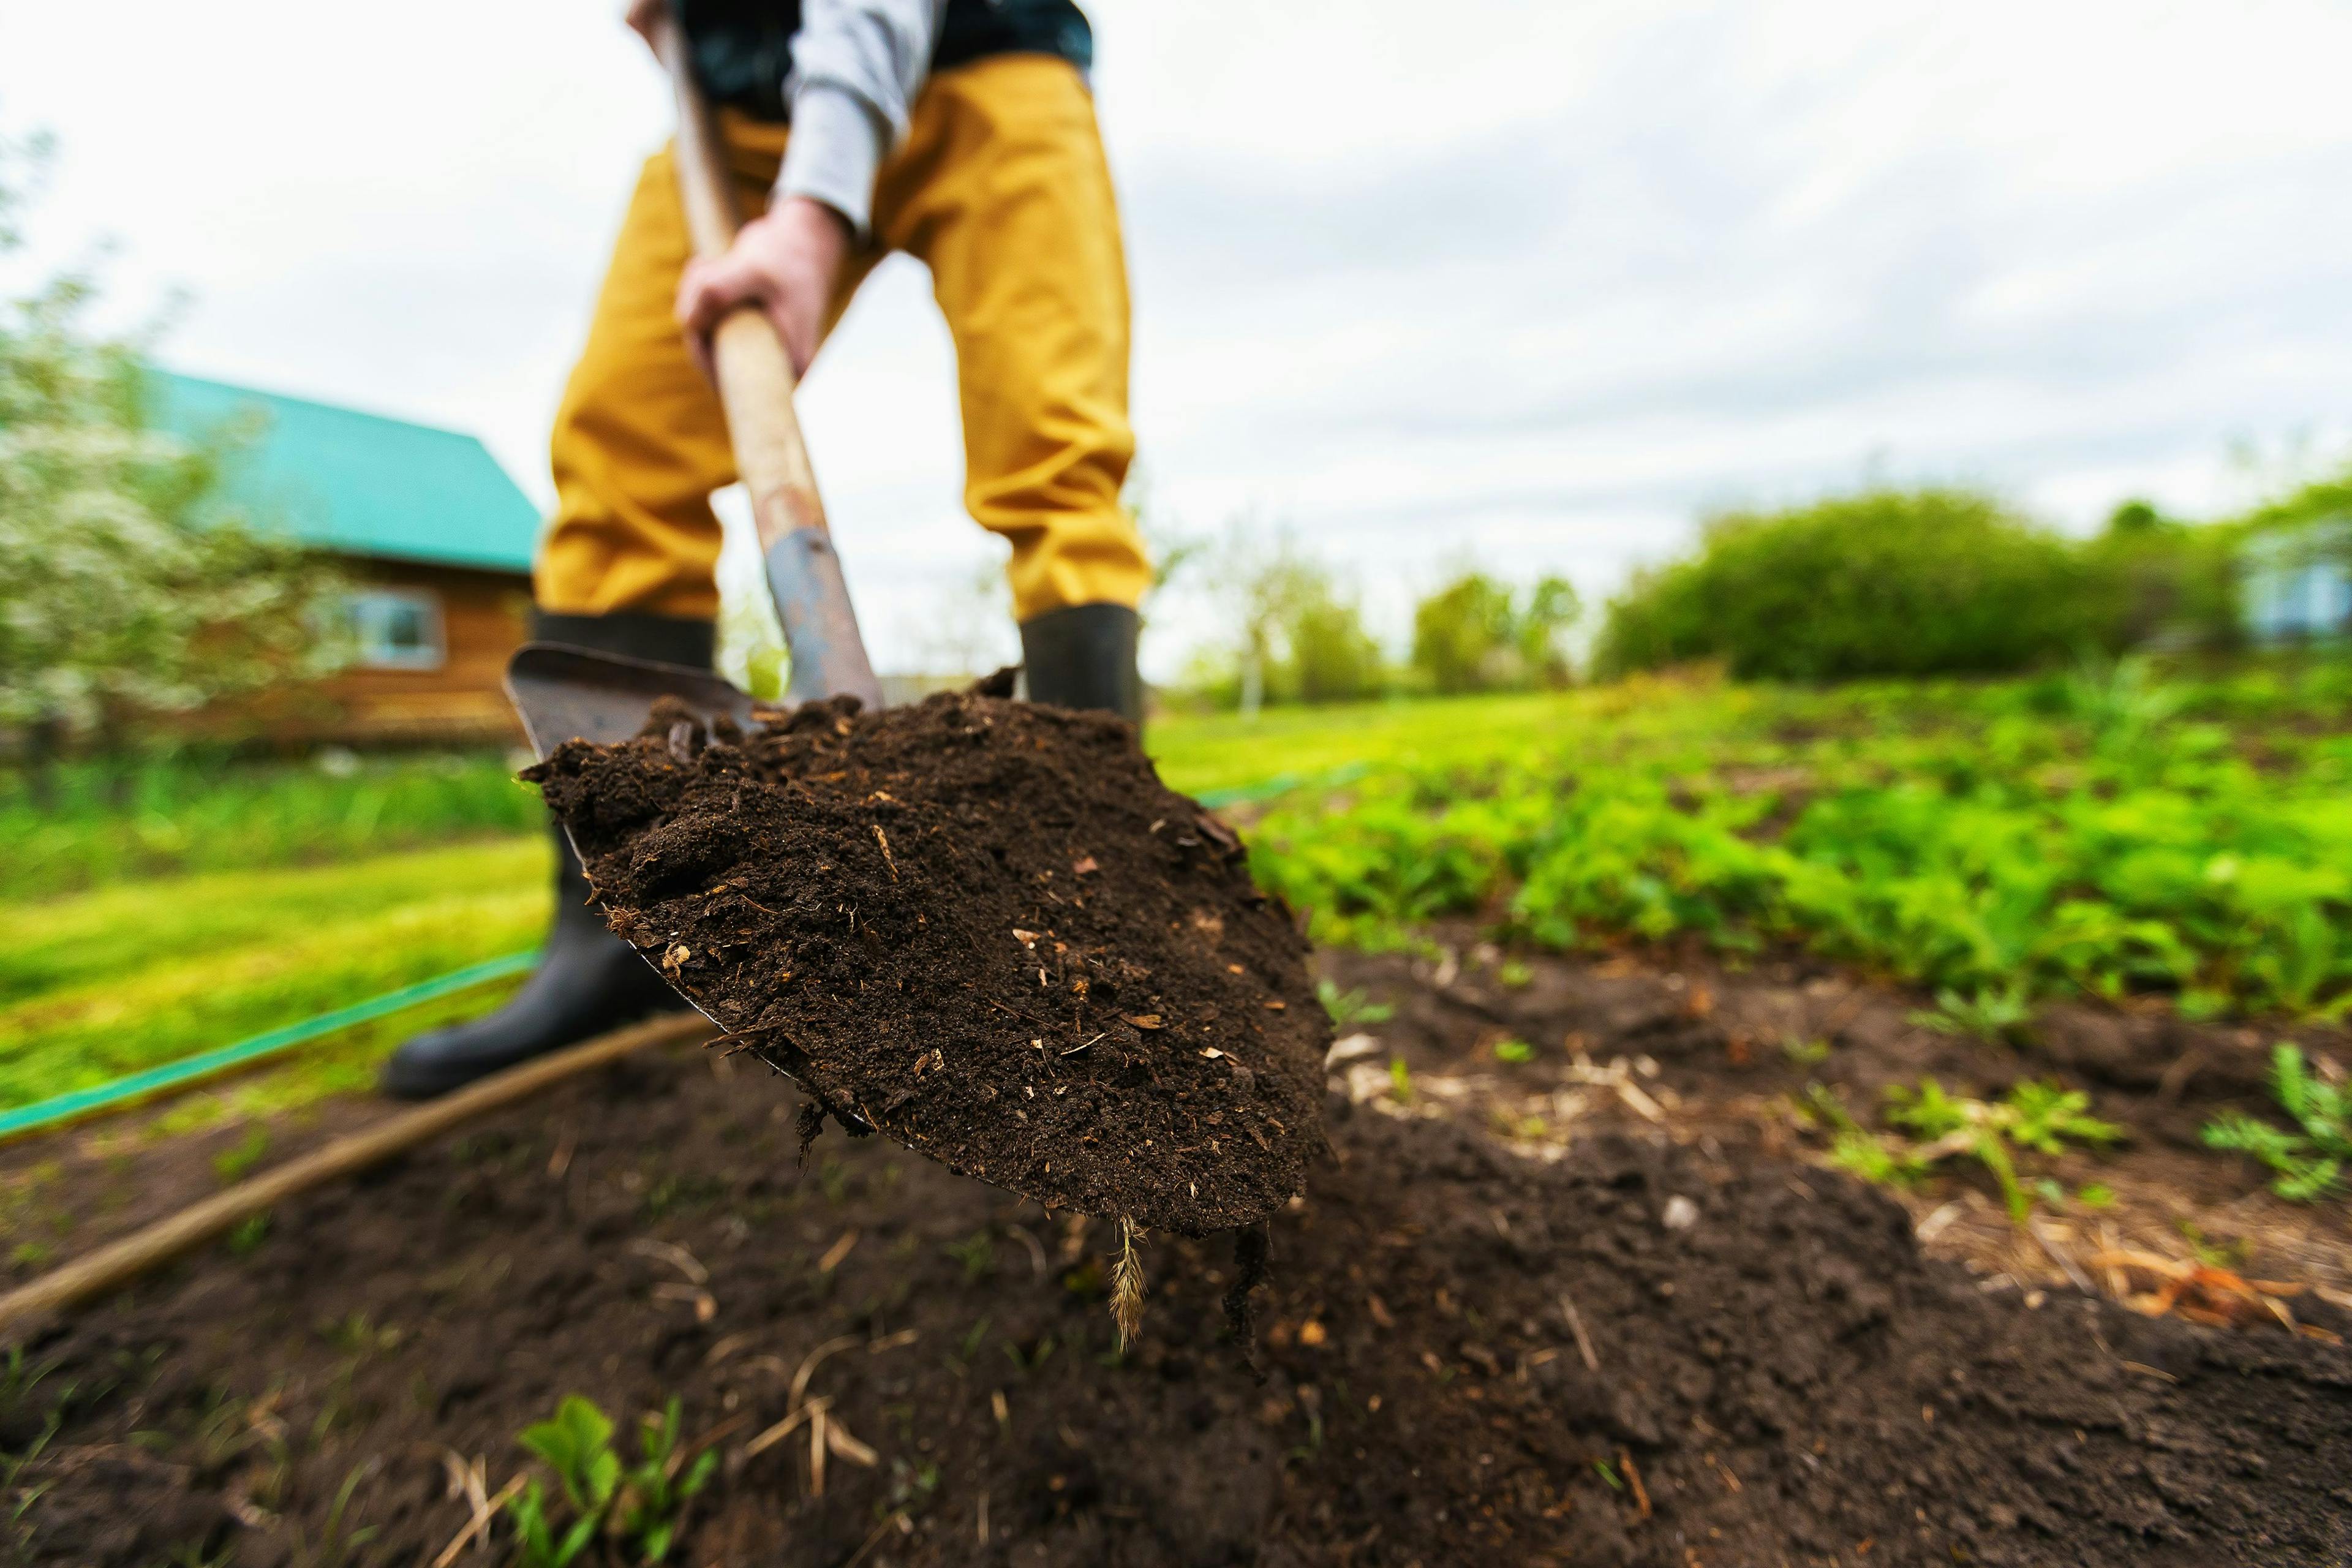 Gardener is digging soil with a shovel at spring green outdoors background. | Image Credit: © vitanovski - stock.adobe.com